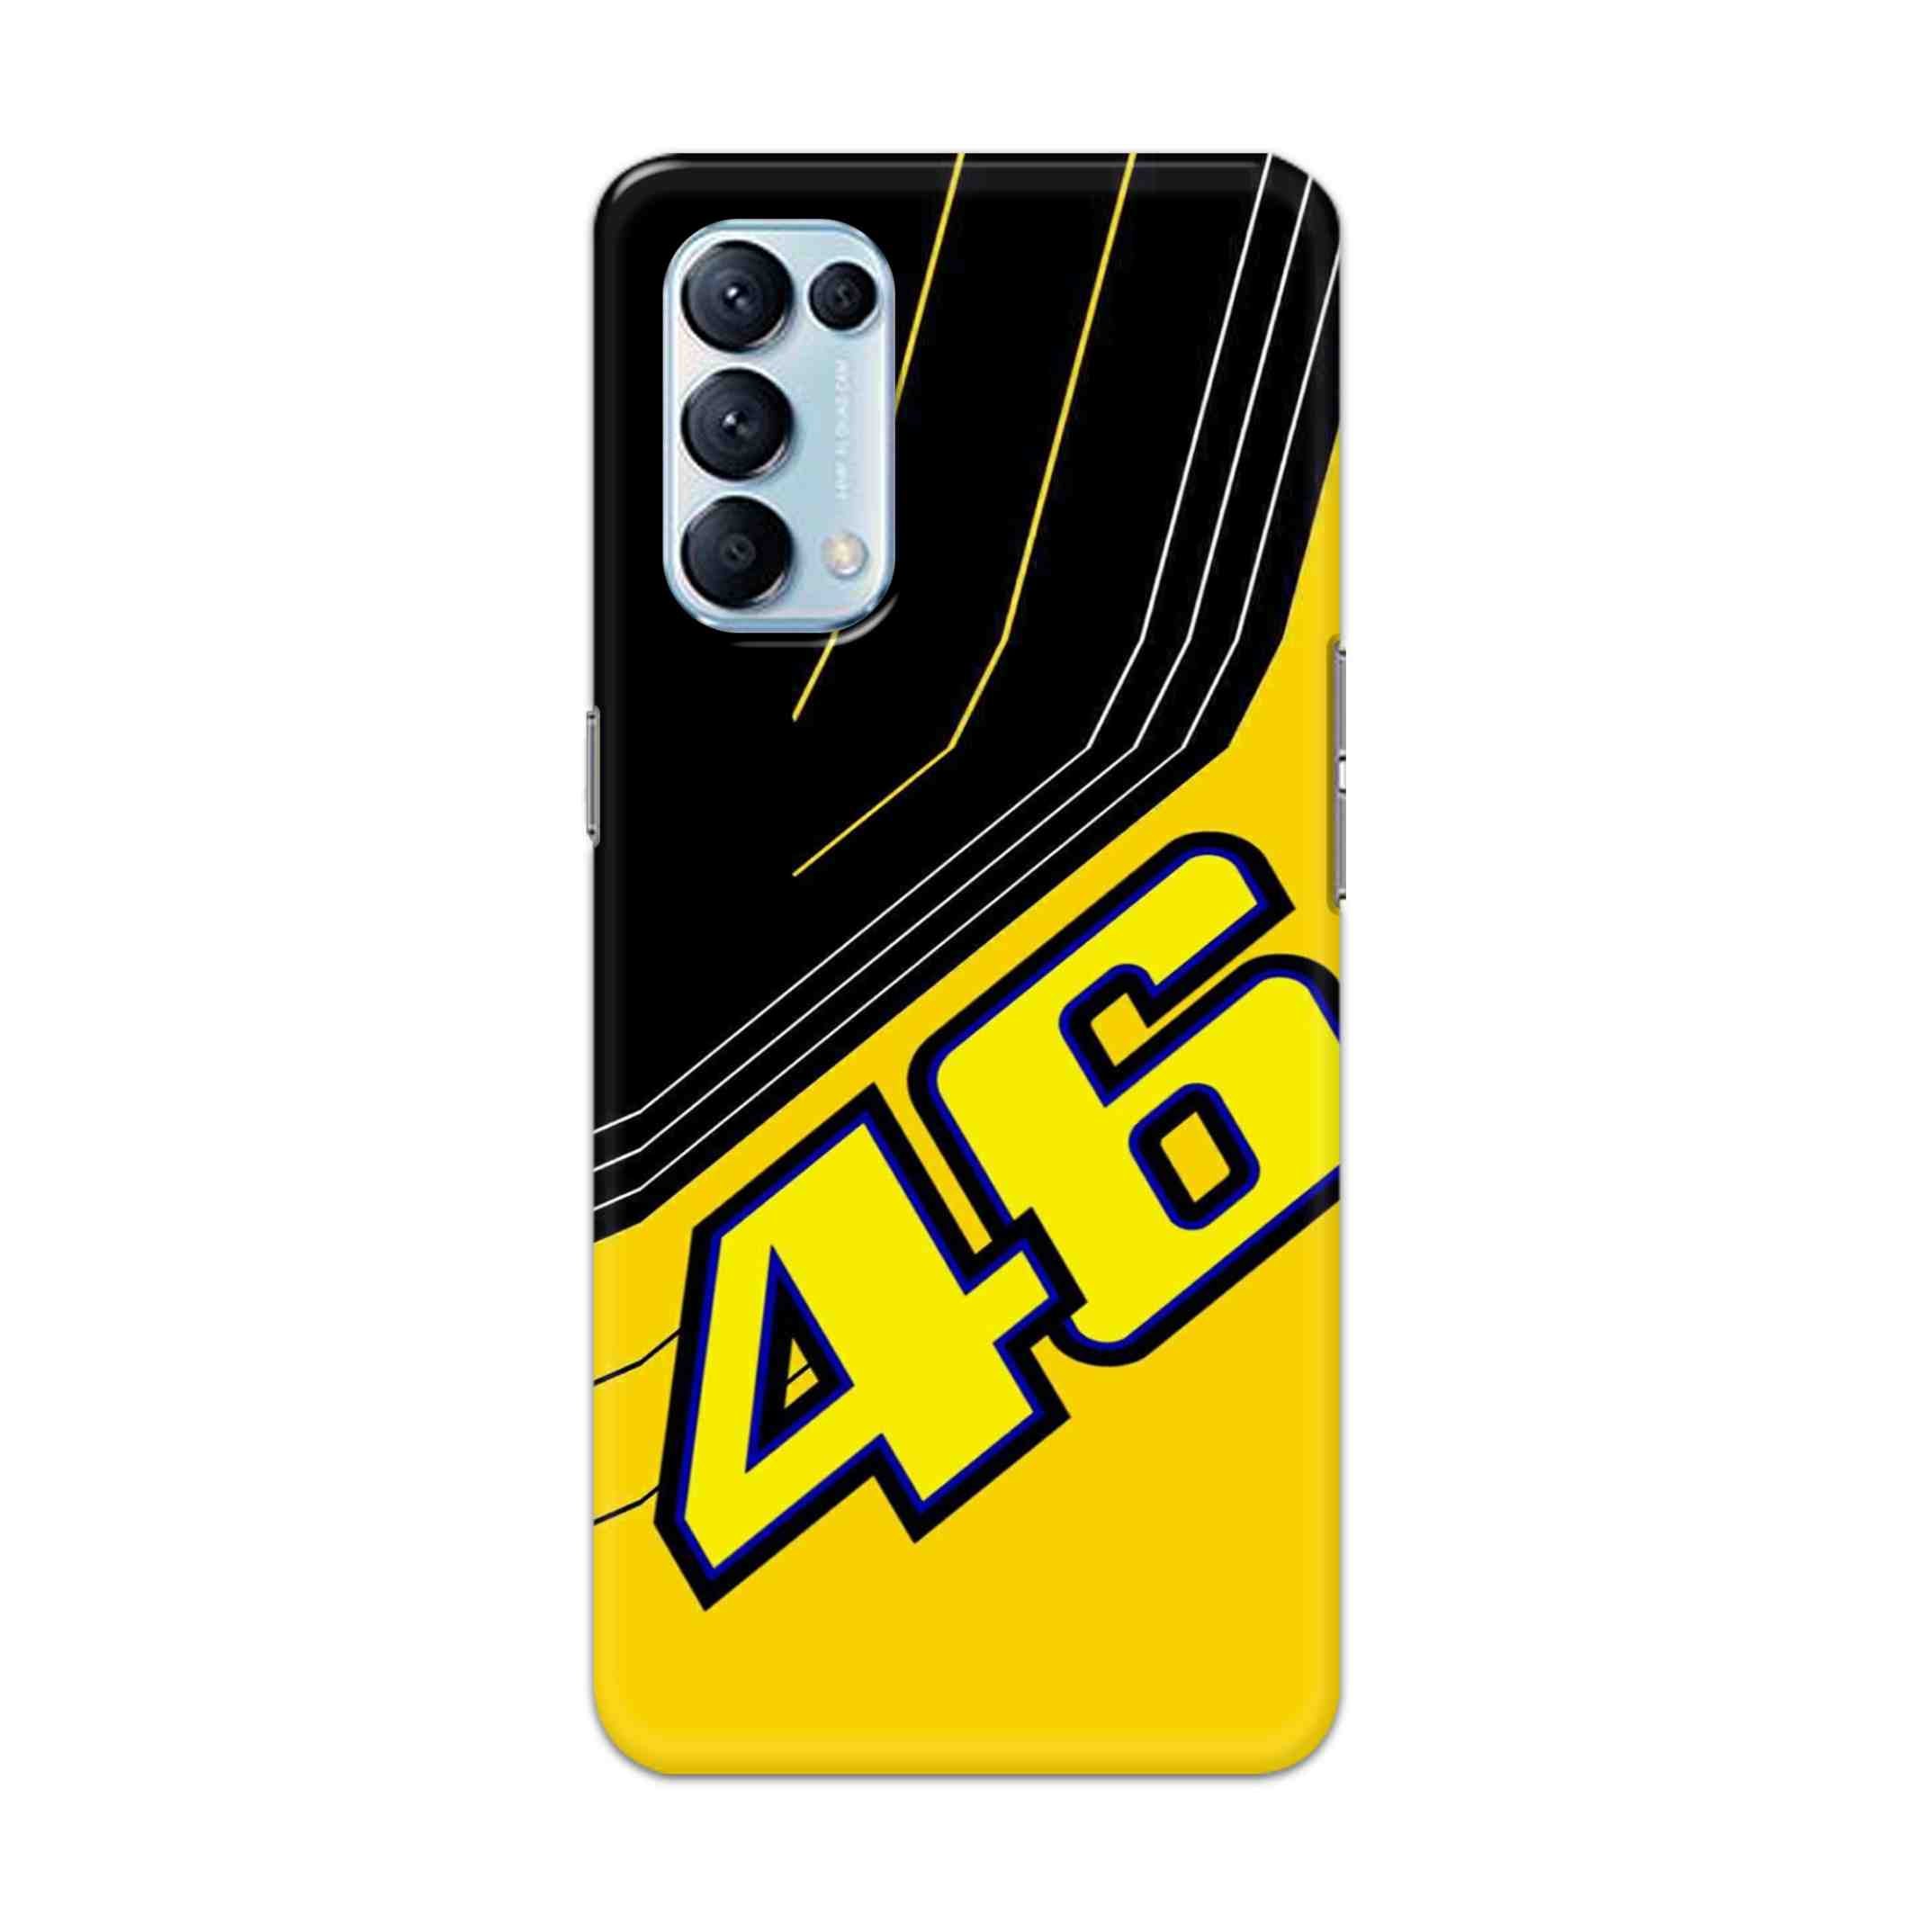 Buy 46 Hard Back Mobile Phone Case Cover For Oppo Reno 5 Pro 5G Online